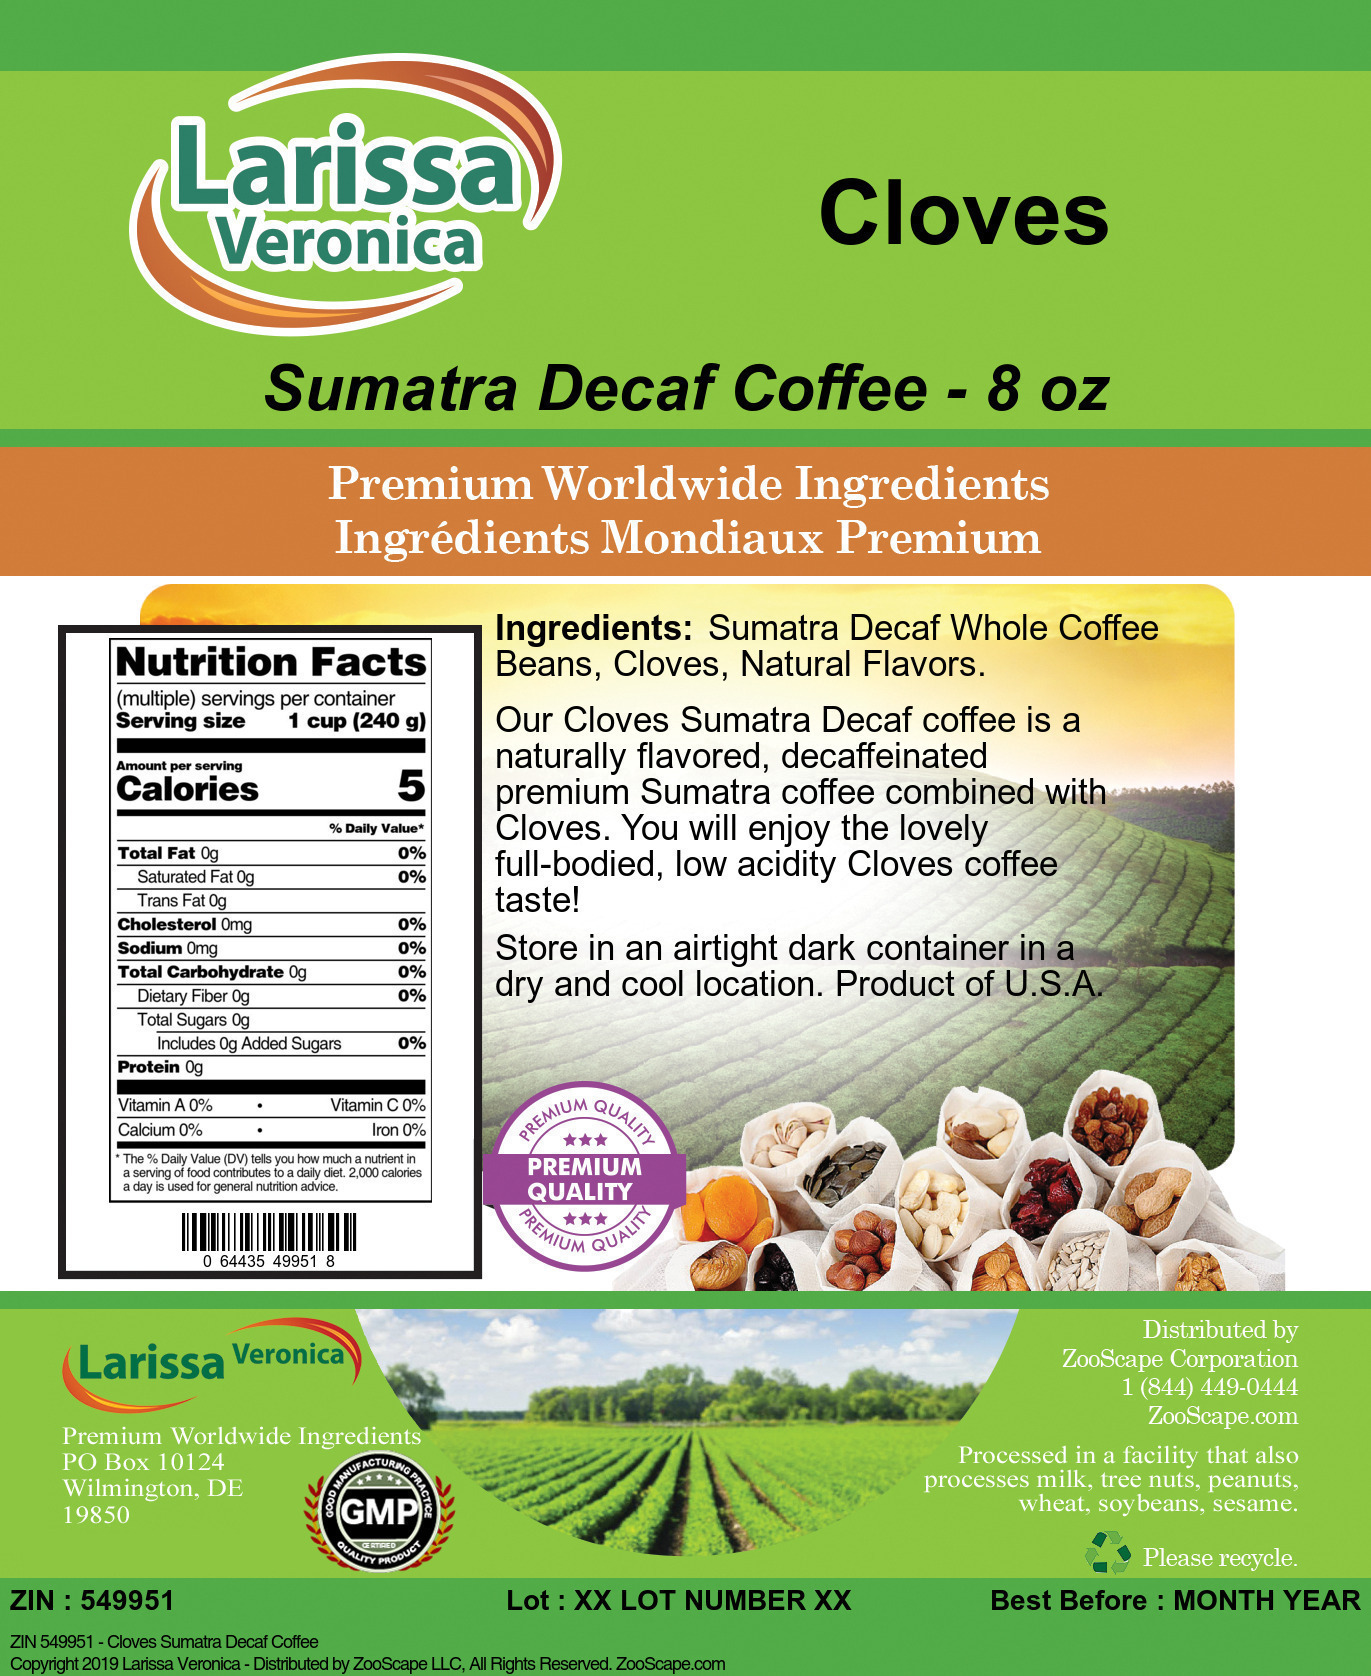 Cloves Sumatra Decaf Coffee - Label